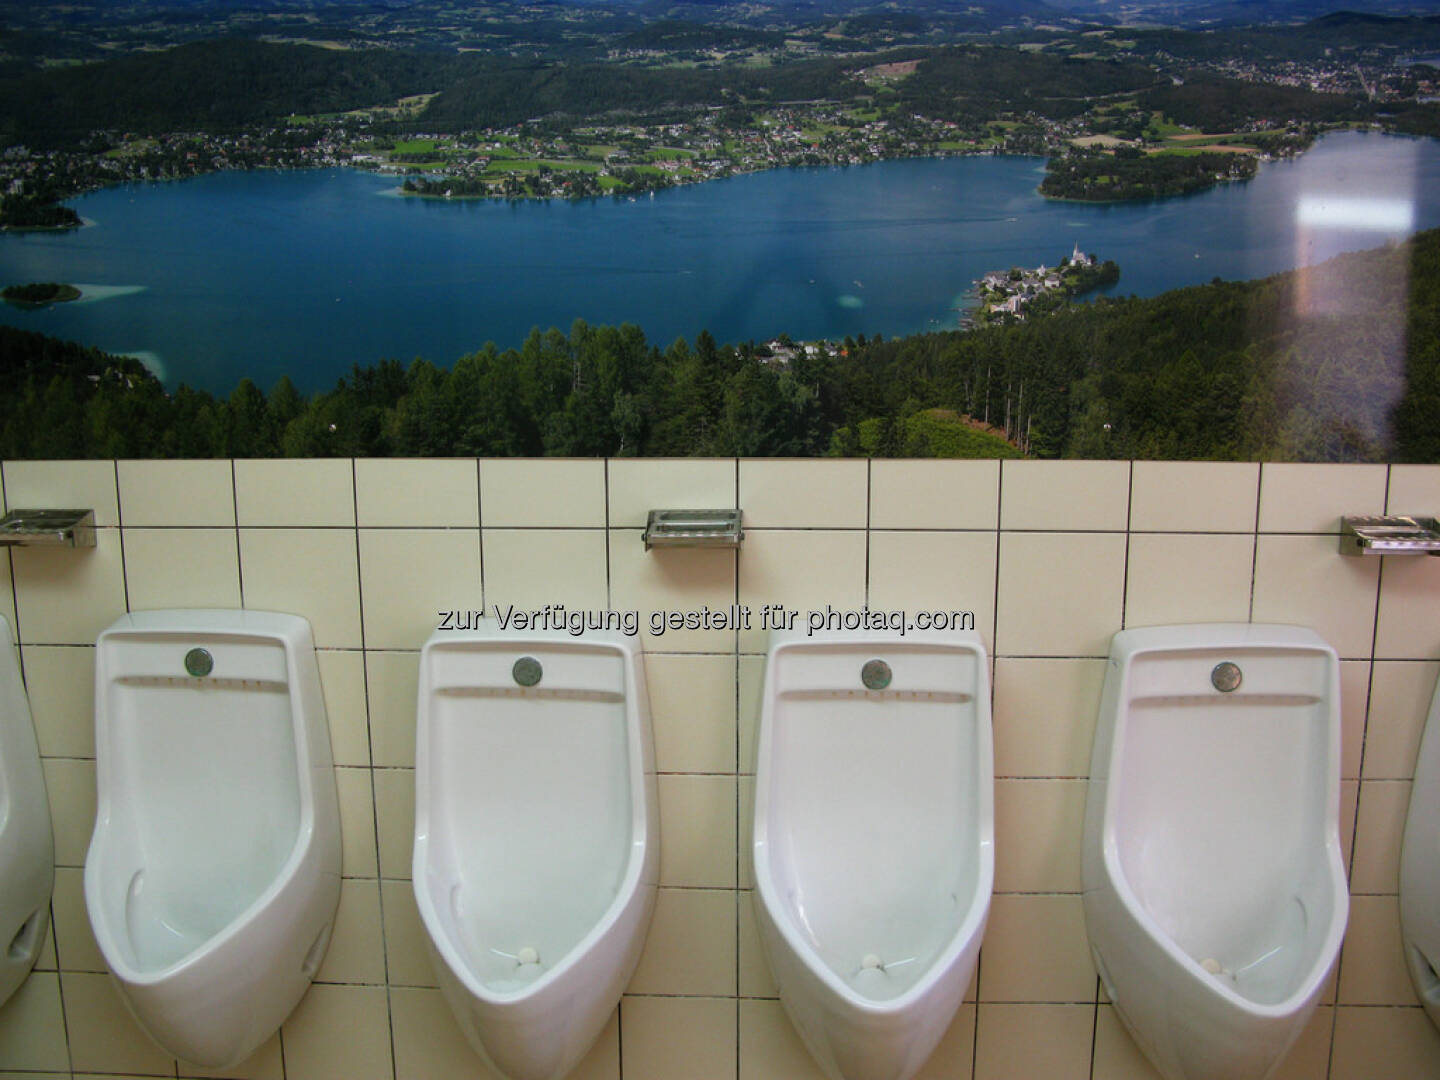 Pissoir mit Ausblick, WC, Toilette (C) Wolfgang Wildner